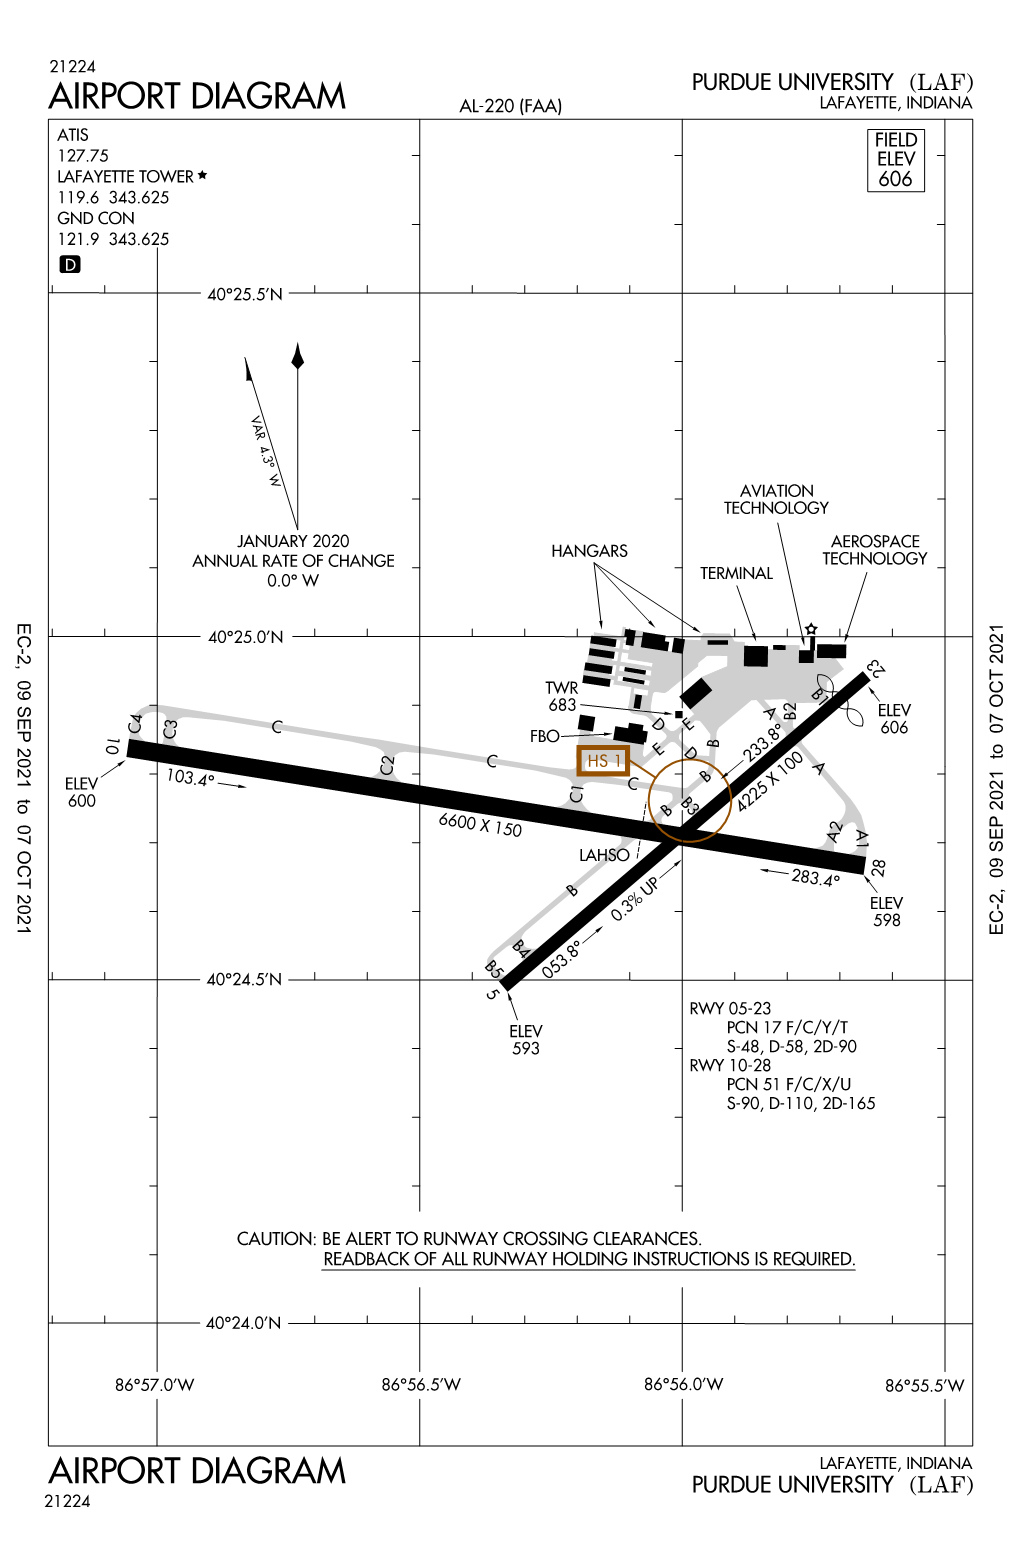 Airport Diagram Al-220 (Faa) Lafayette, Indiana